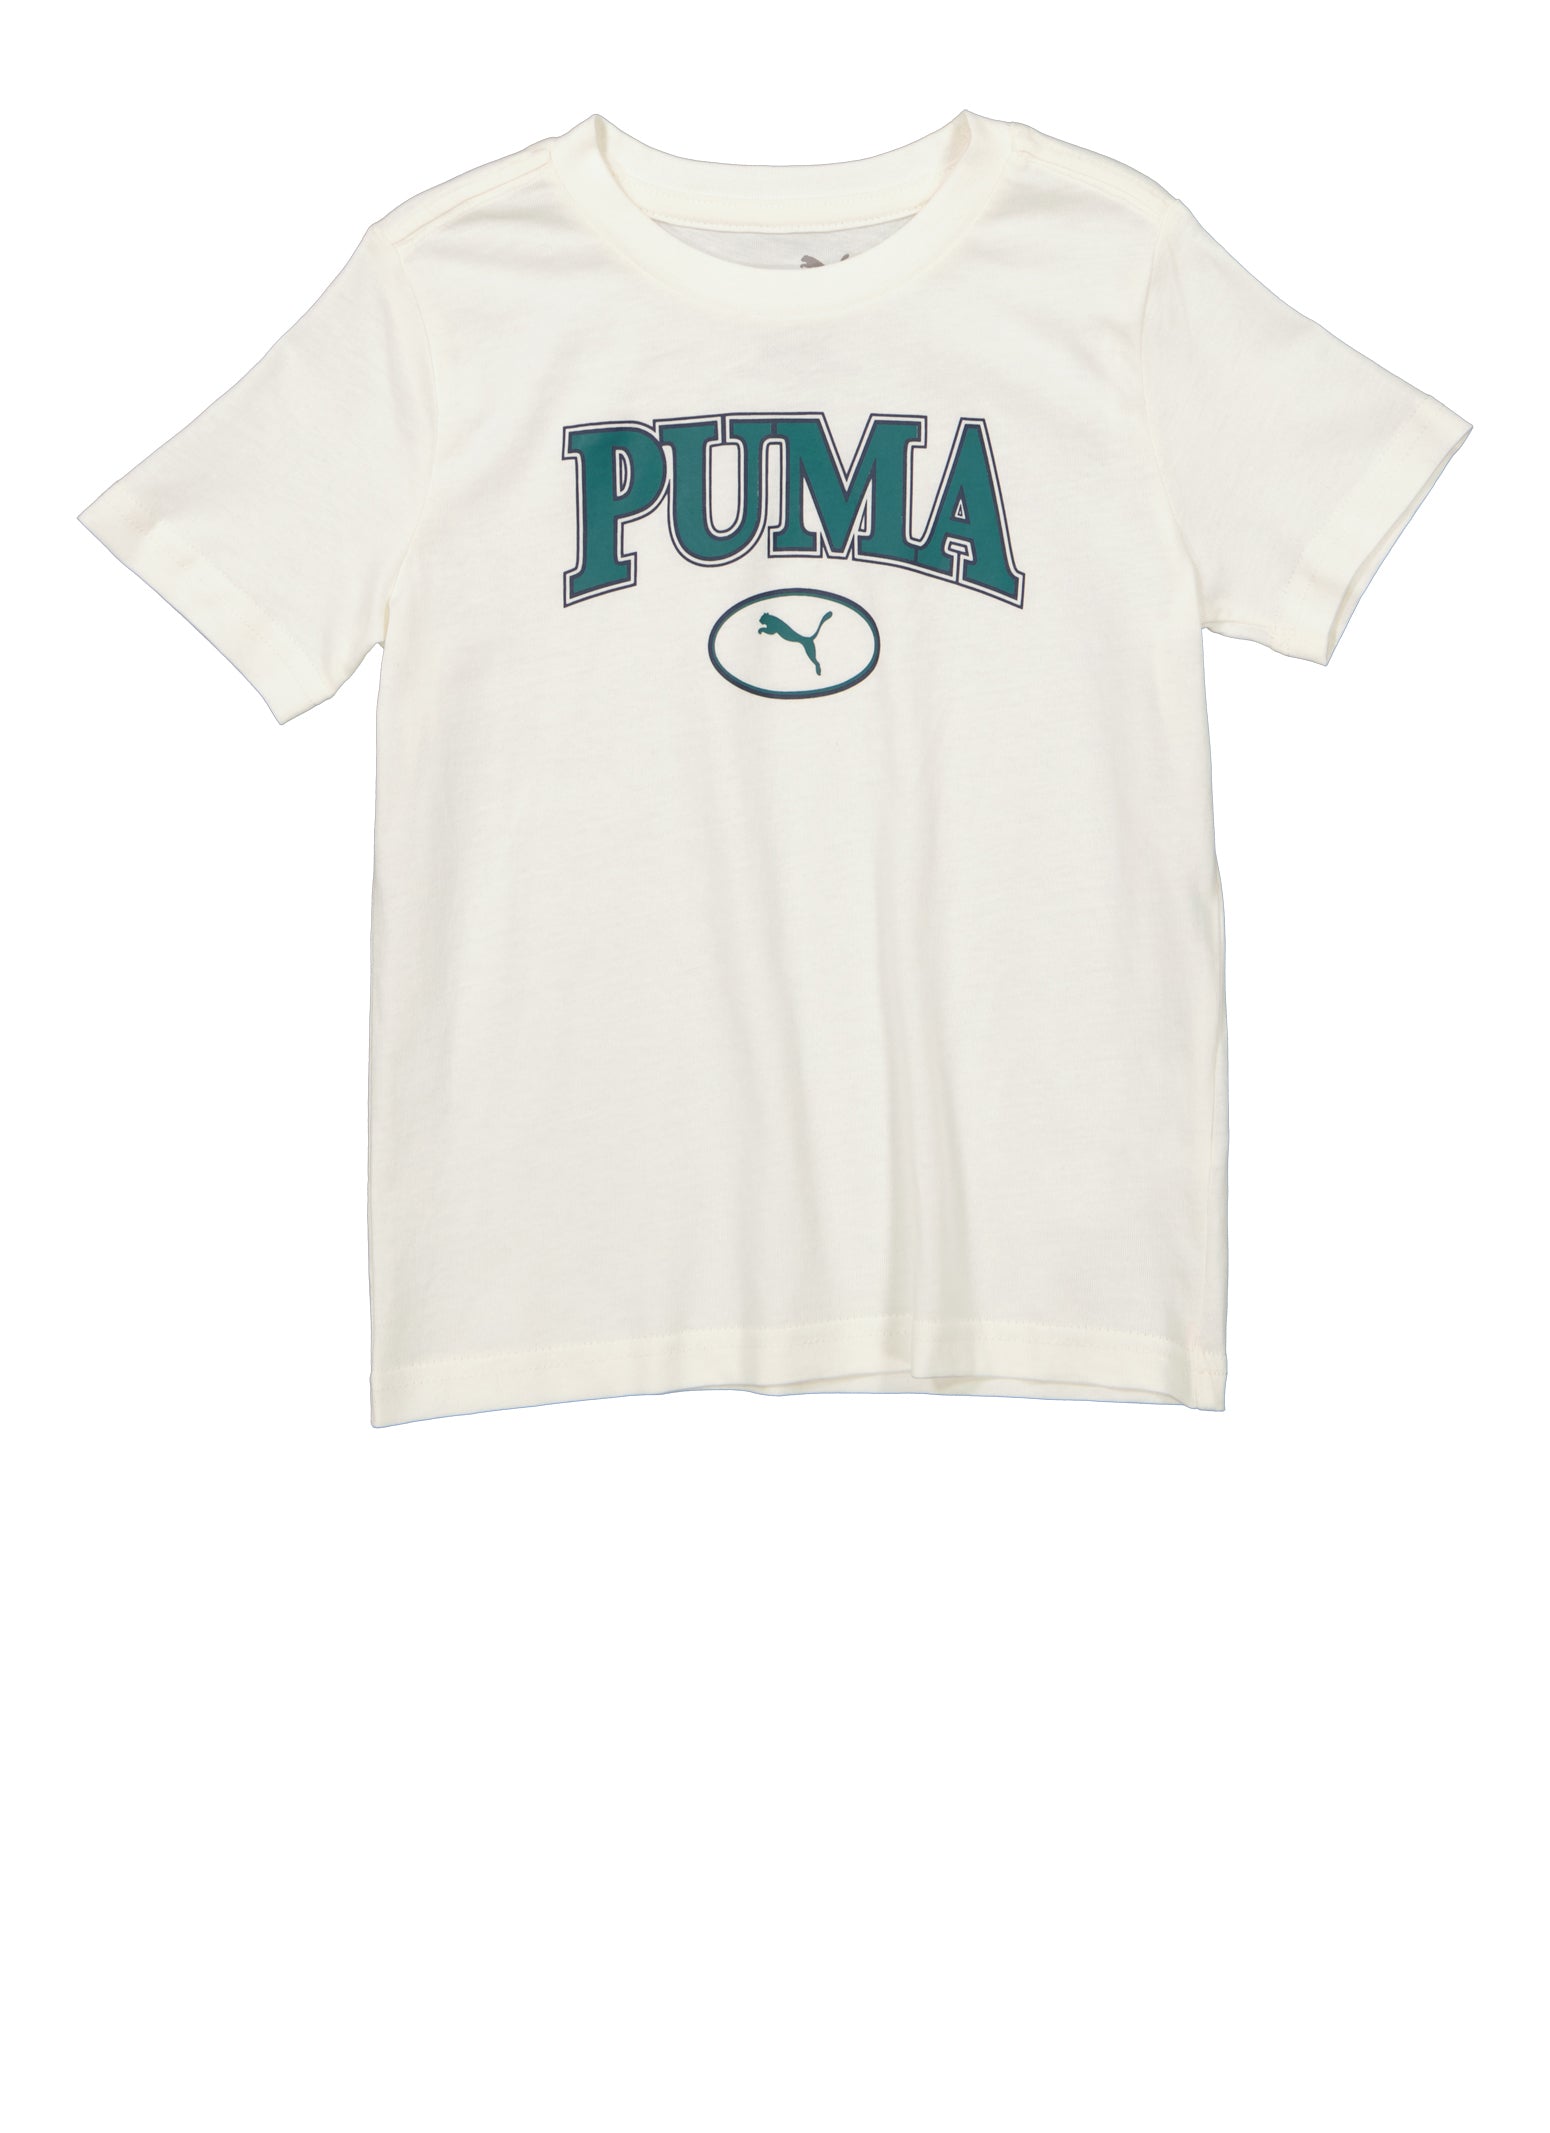 Little Boys Puma Logo Short Sleeve Graphic Tee, White, Size 4